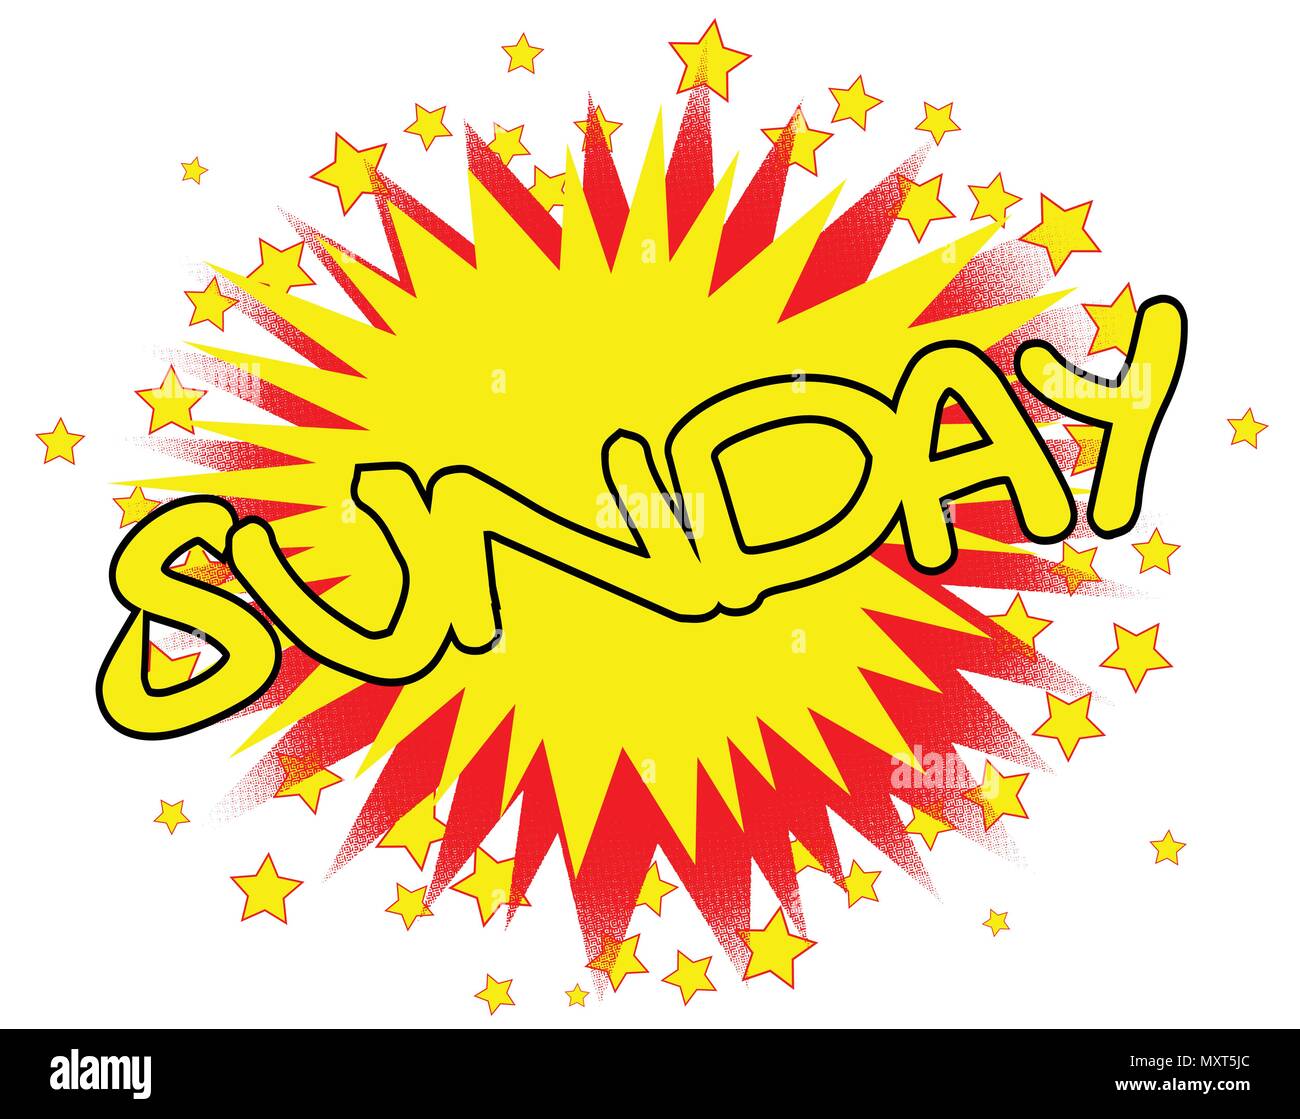 A cartoon style Sunday splash explosive motif over a white background Stock Vector